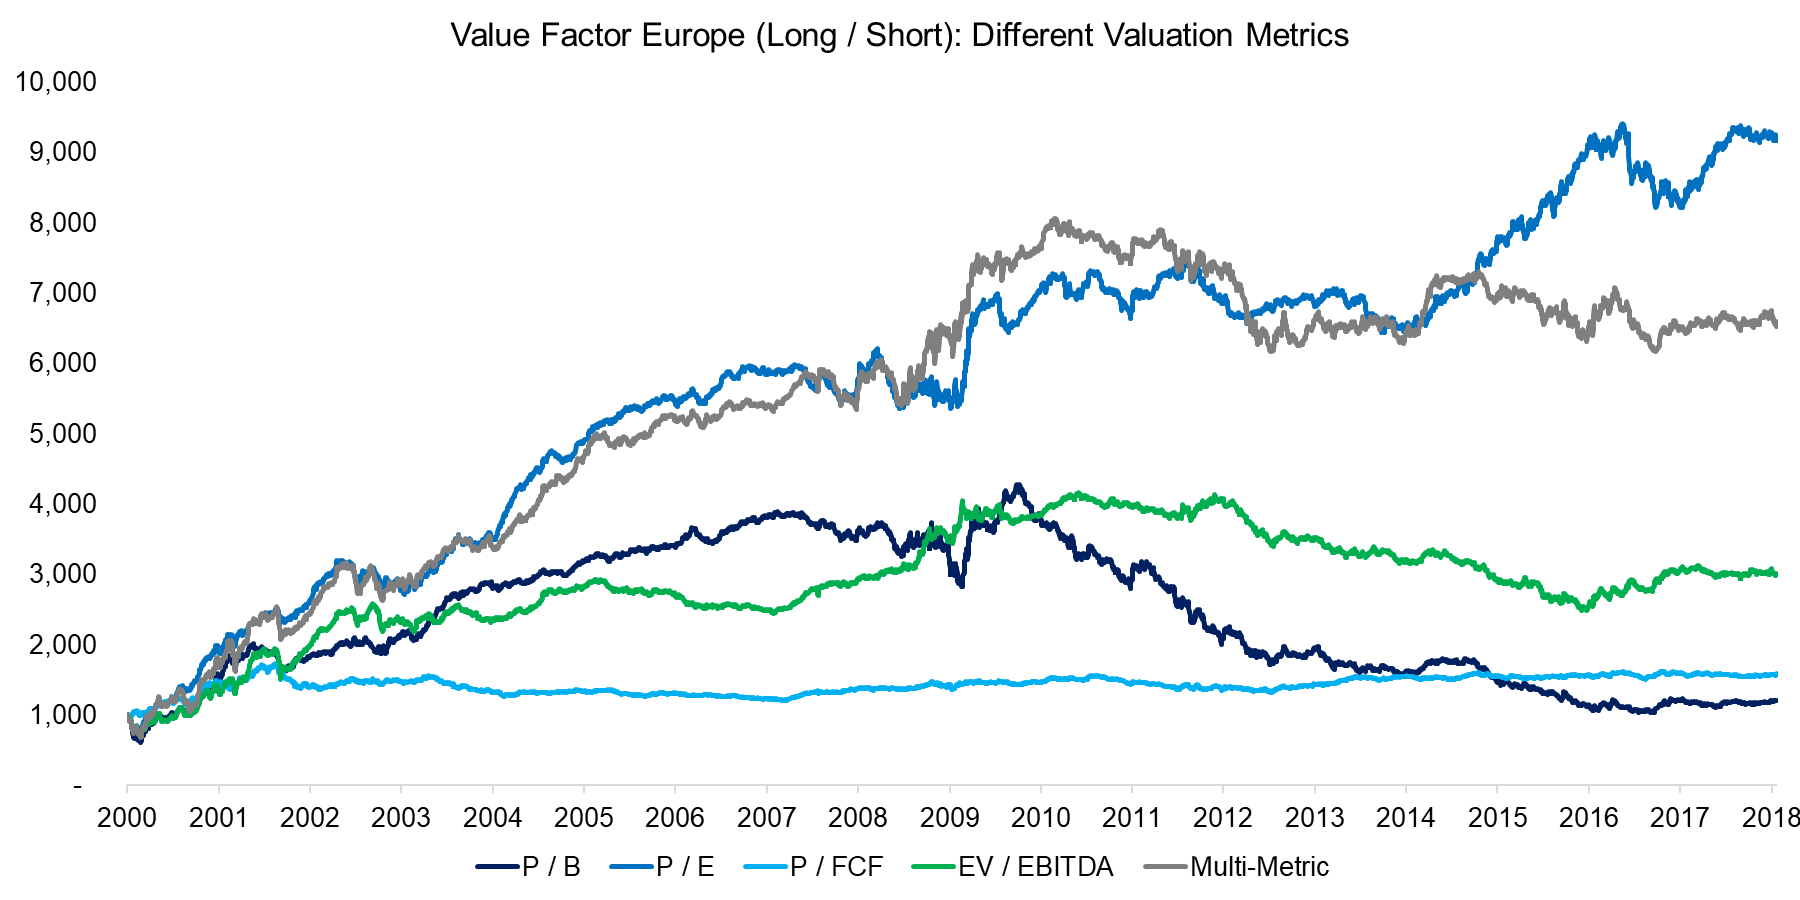 Value Factor Europe (Long Short) Different Valuation Metrics